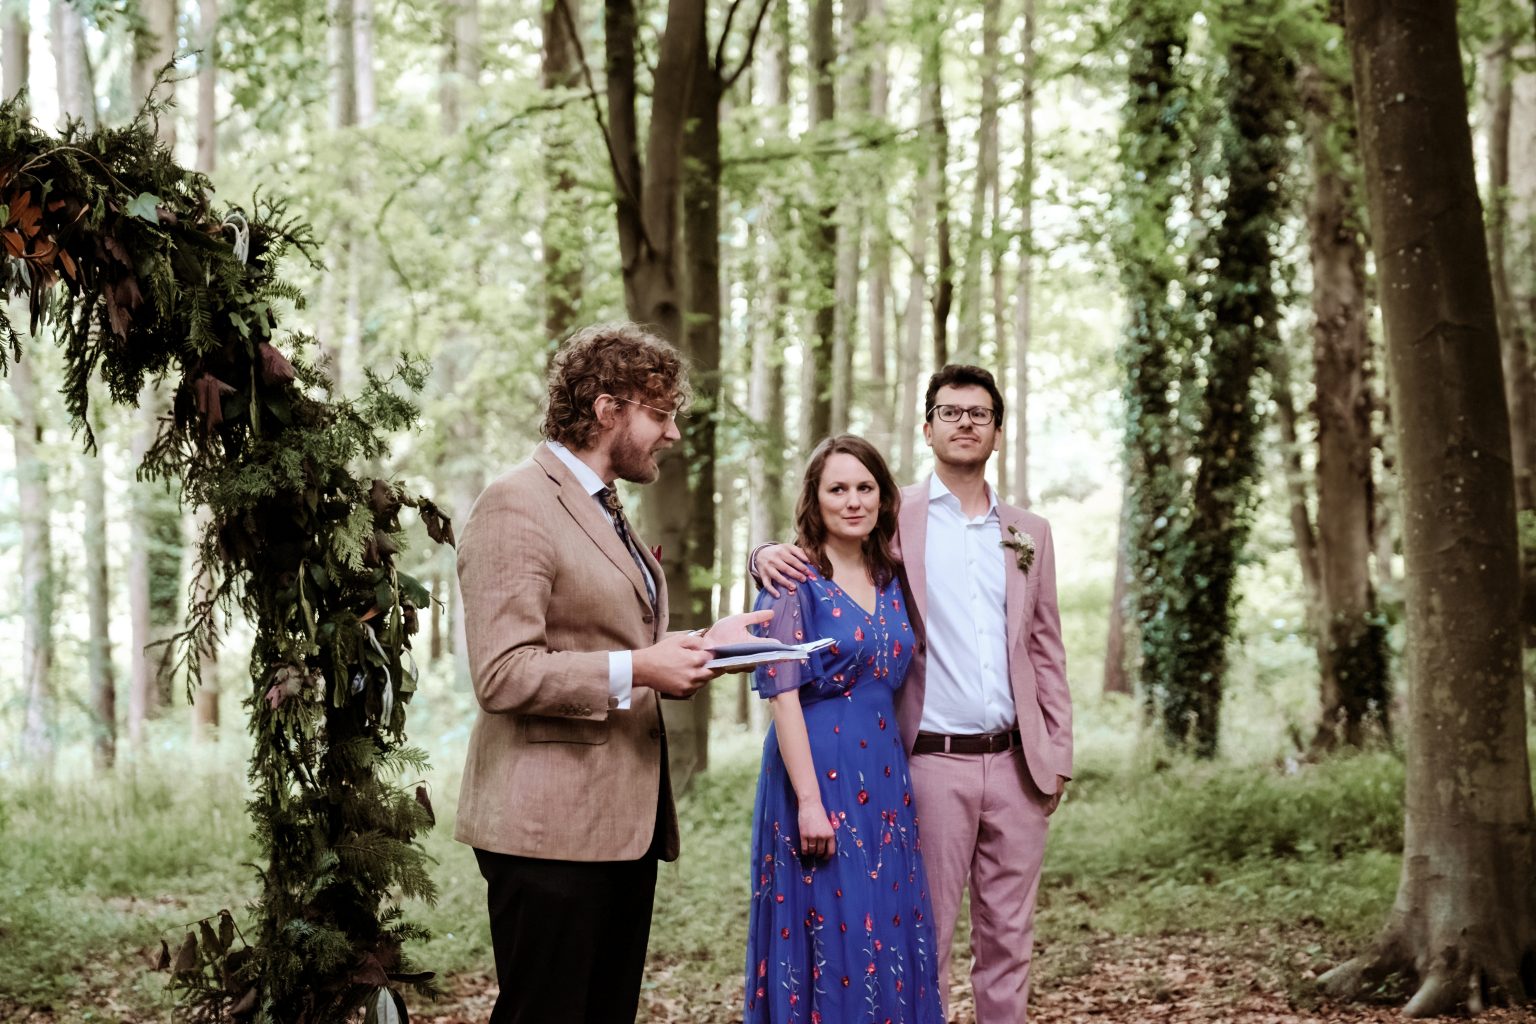 Evenley Wood Garden Wedding Photography - Woodland Civil Partnership in Northamptonshire